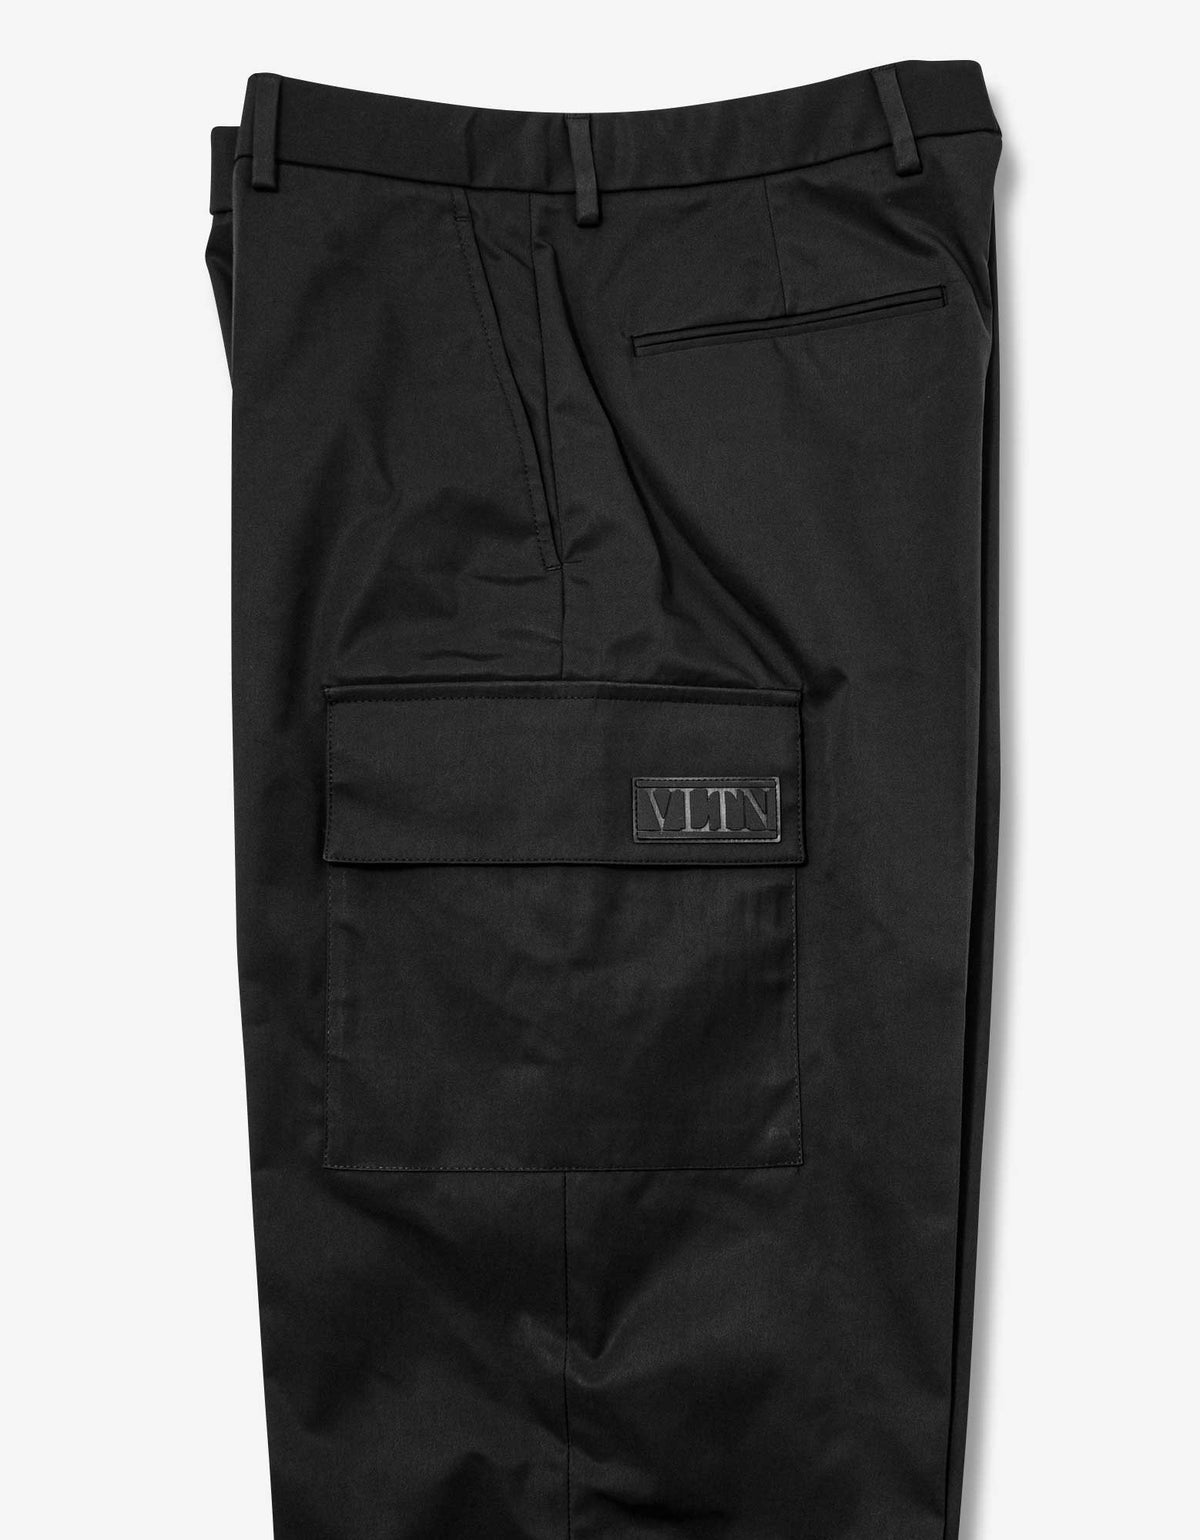 Valentino Black VLTN Tag Cargo Trousers